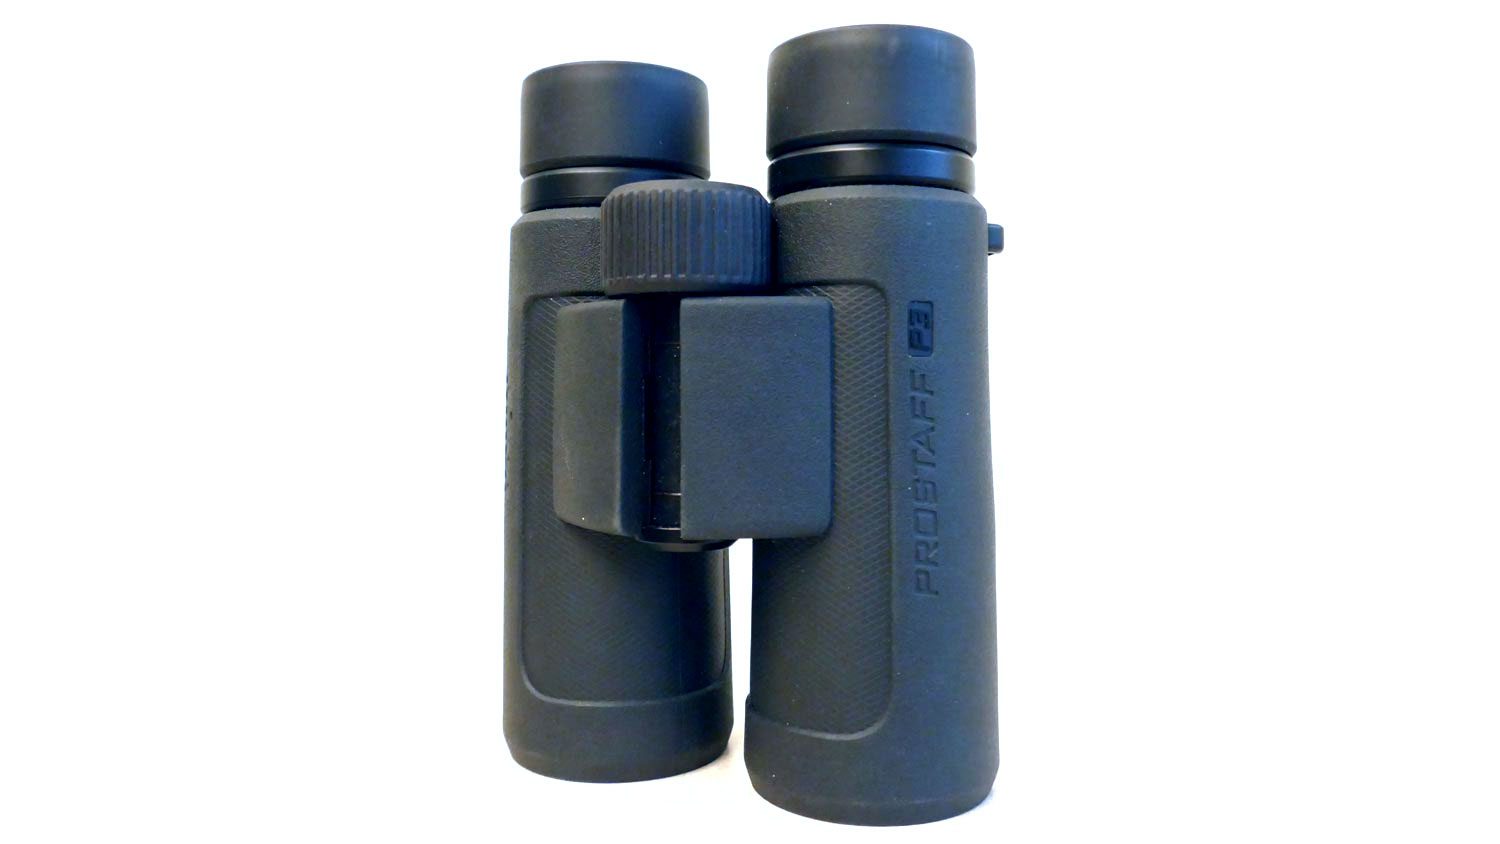 Nikon ProStaff P3 8×42 Binoculars: Our Evaluation